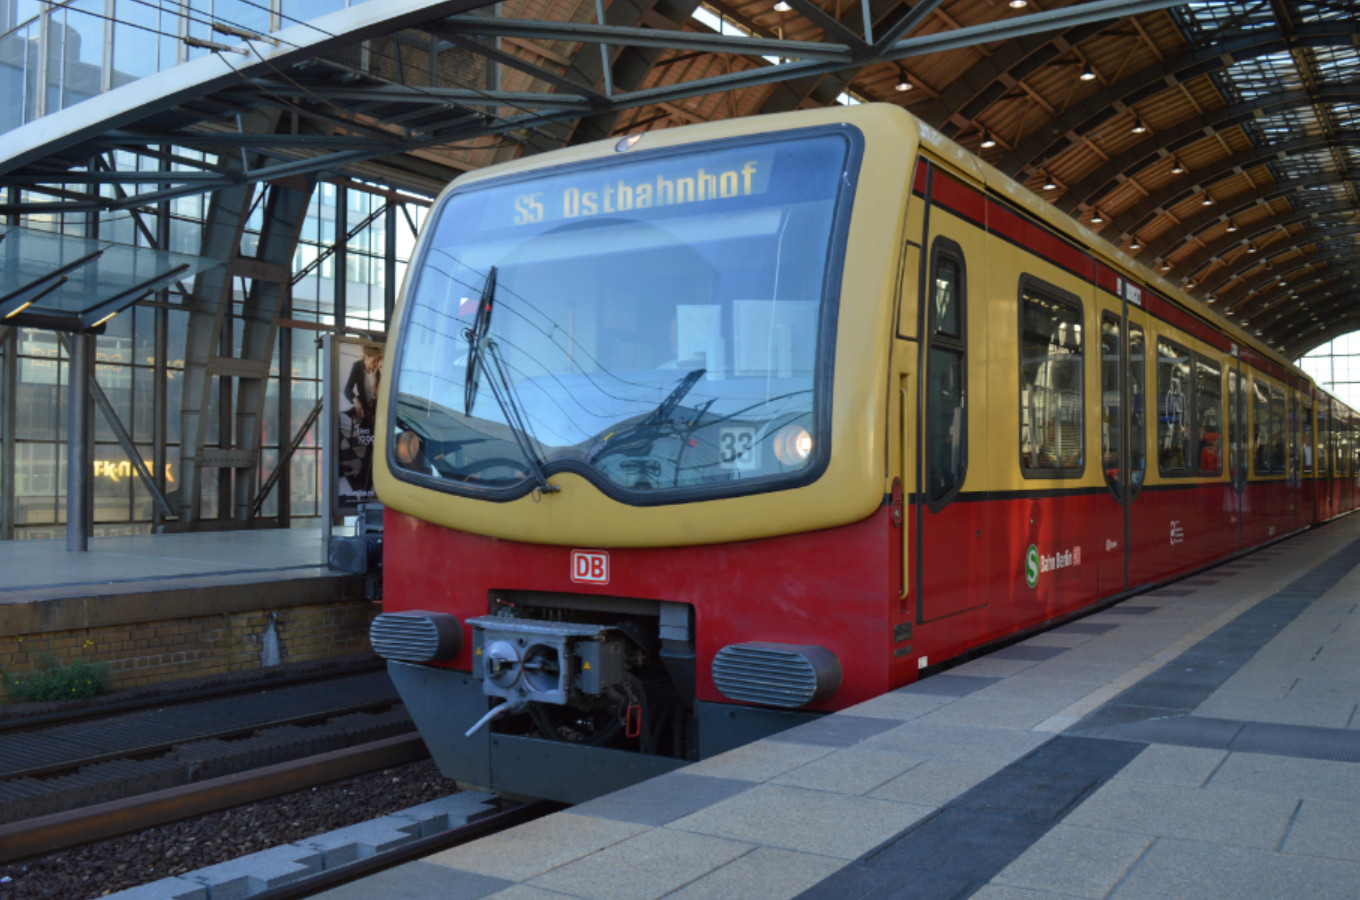 Ein S-Bahn-Triebzug am Bahnhof Berlin-Alexanderplatz. (Foto: © Bahnblogstelle)